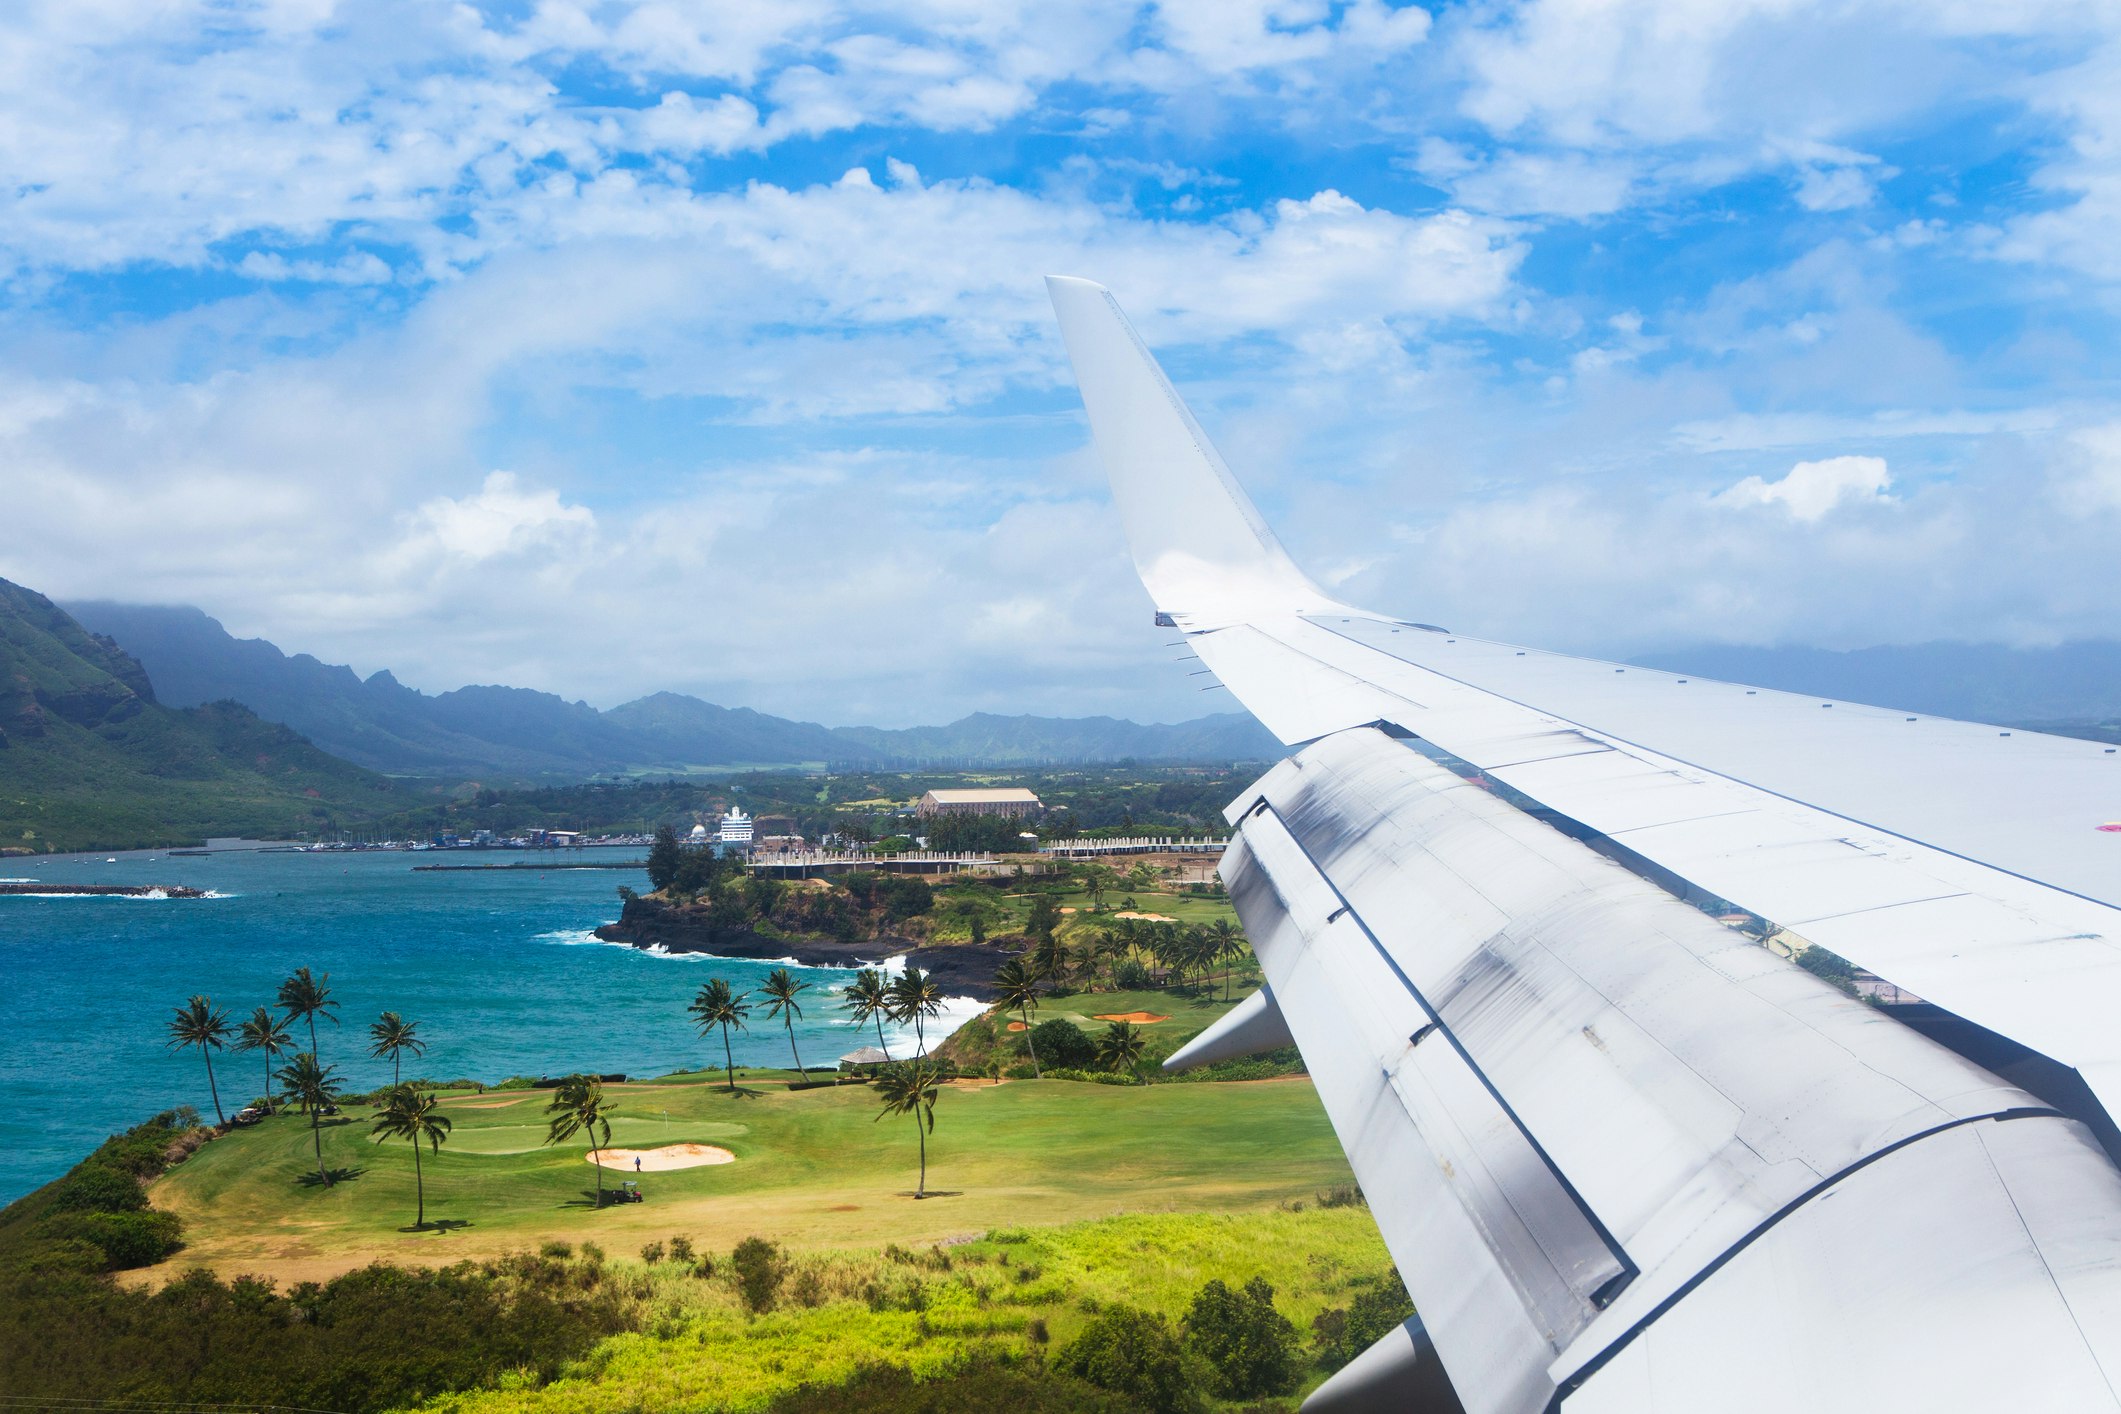 A plane flies into Lihue airport on Kauai.
502779489
aerial view, airplane, port
A plane flies into Lihue airport on Kauai.